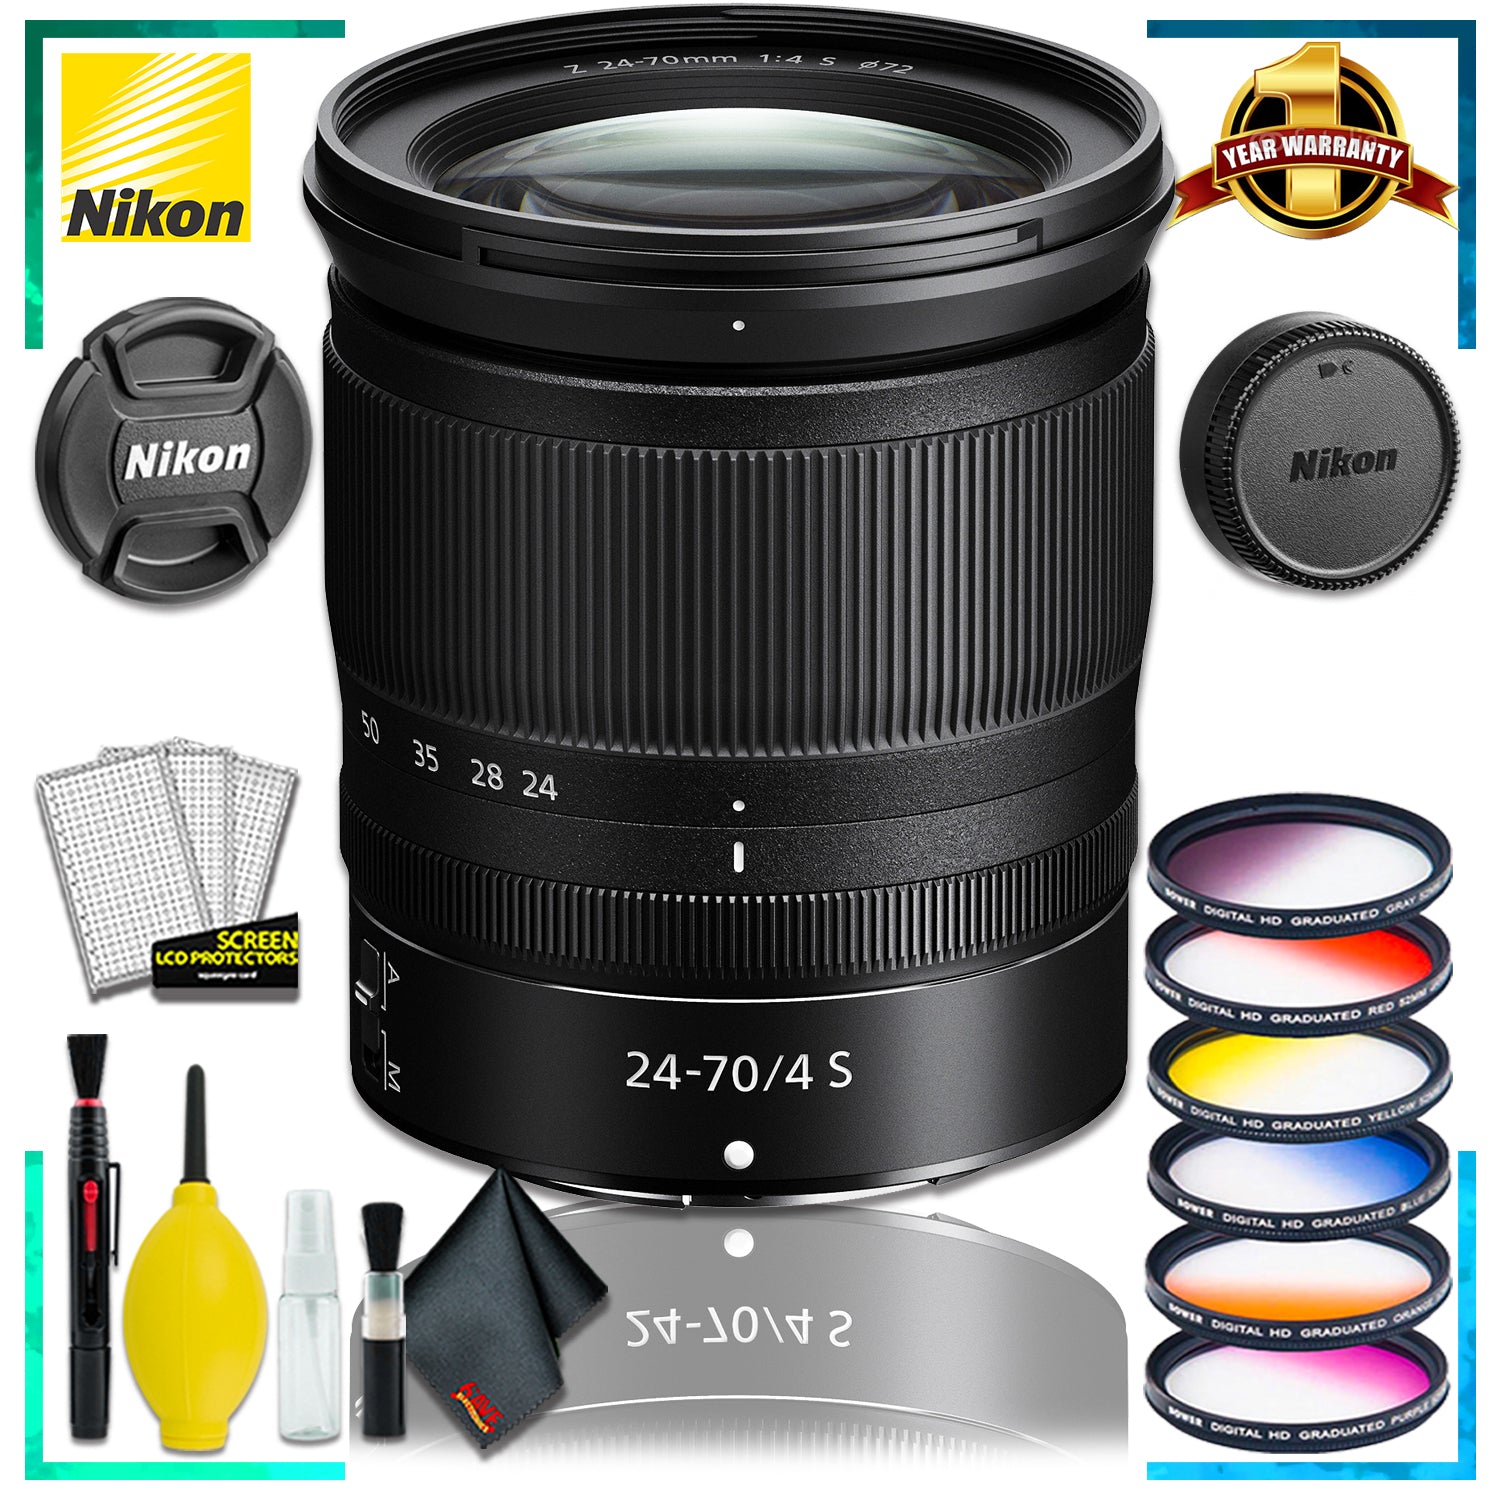 Nikon NIKKOR Z 24-70mm f.4 S Lens (Intl Model) + Vivitar Graduated Color Filter Kit + Cleaning Kit